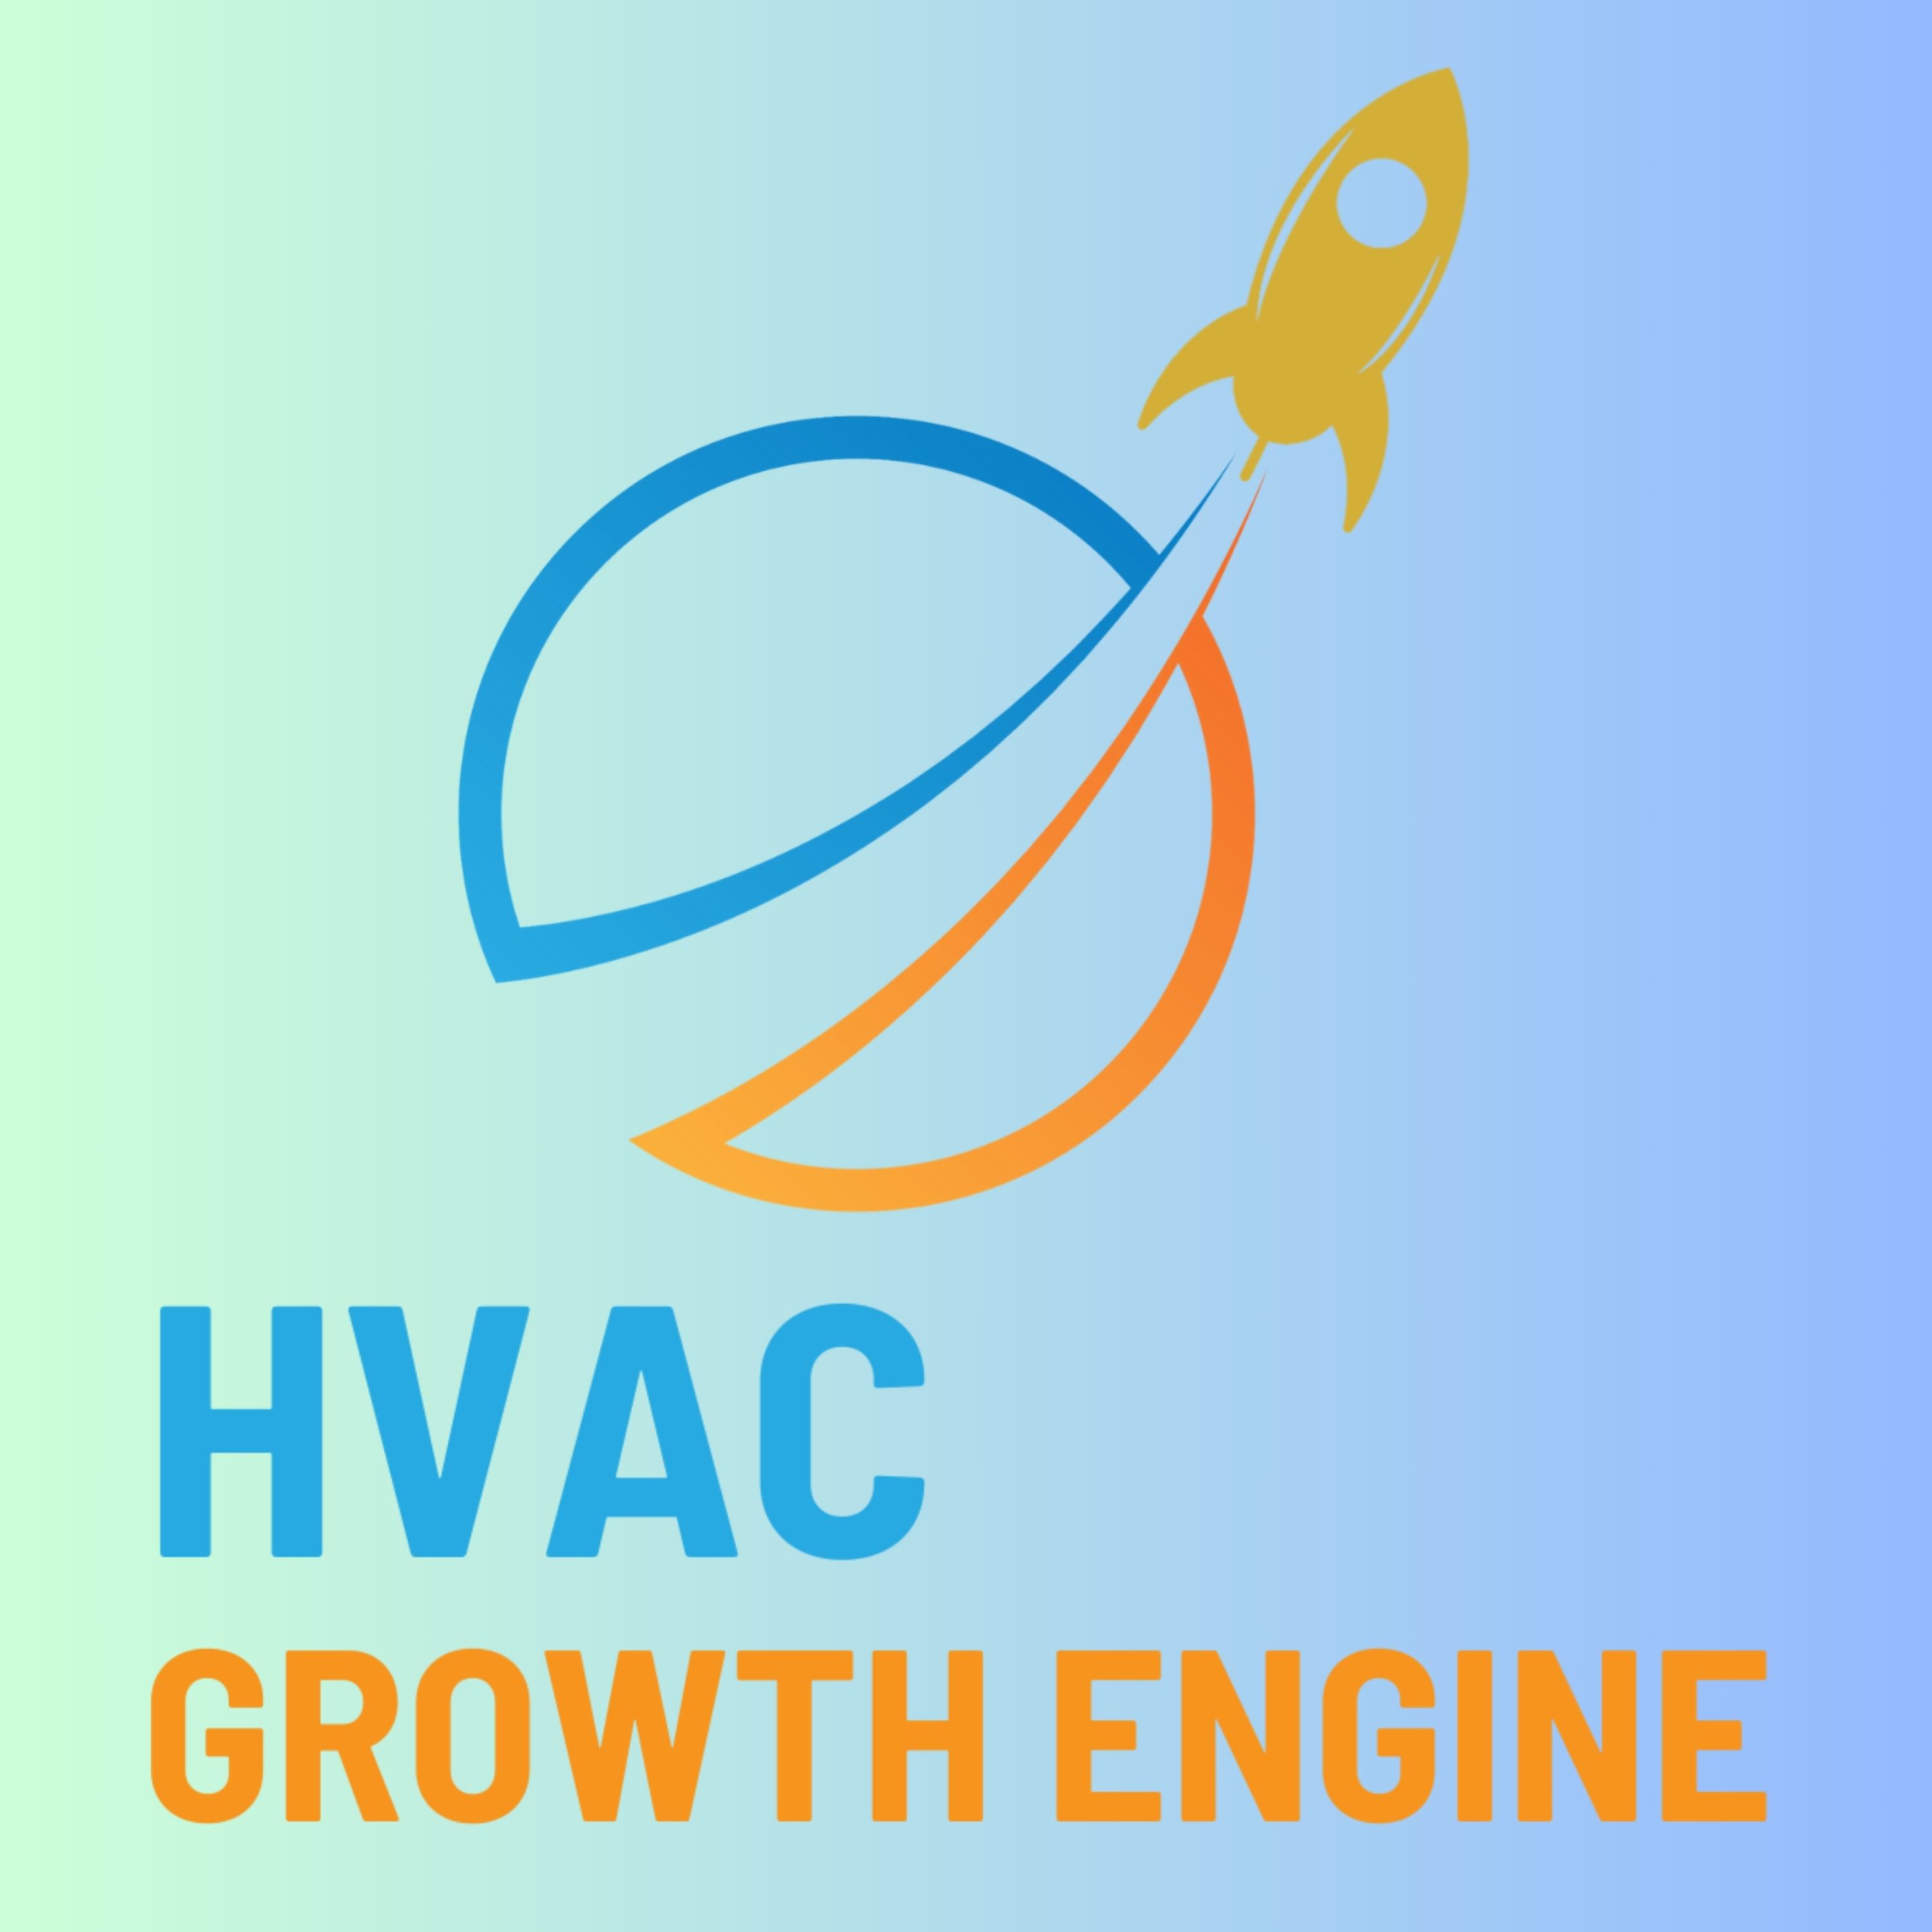 HVAC Growth Engine Podcast: Bringing the HVAC Industry Together